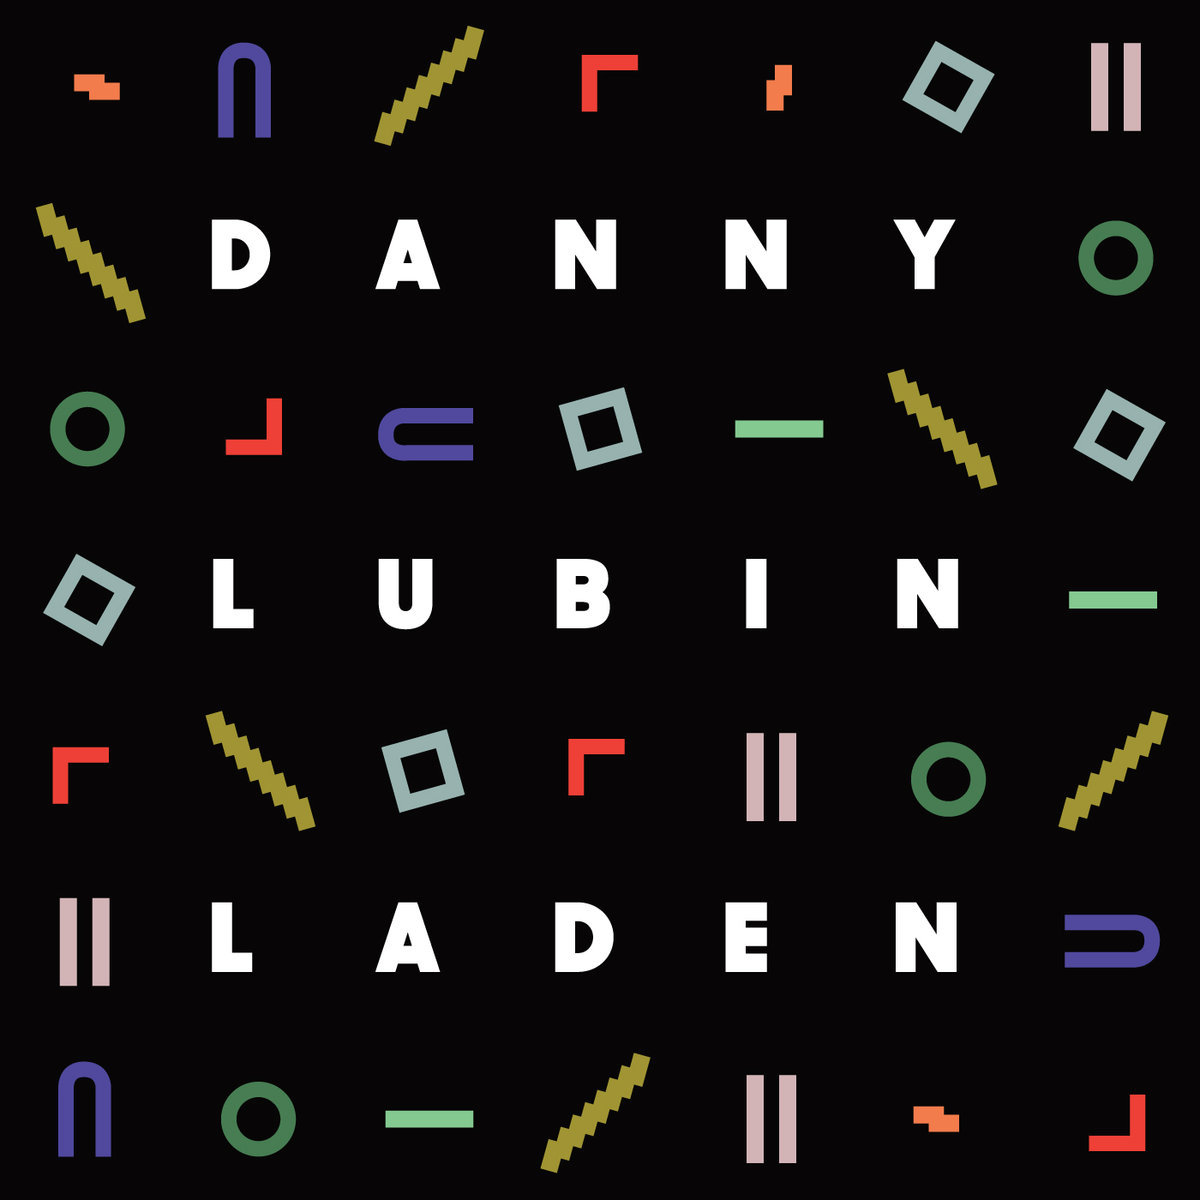 Danny Lubin-Laden – Danny Lubin-Laden